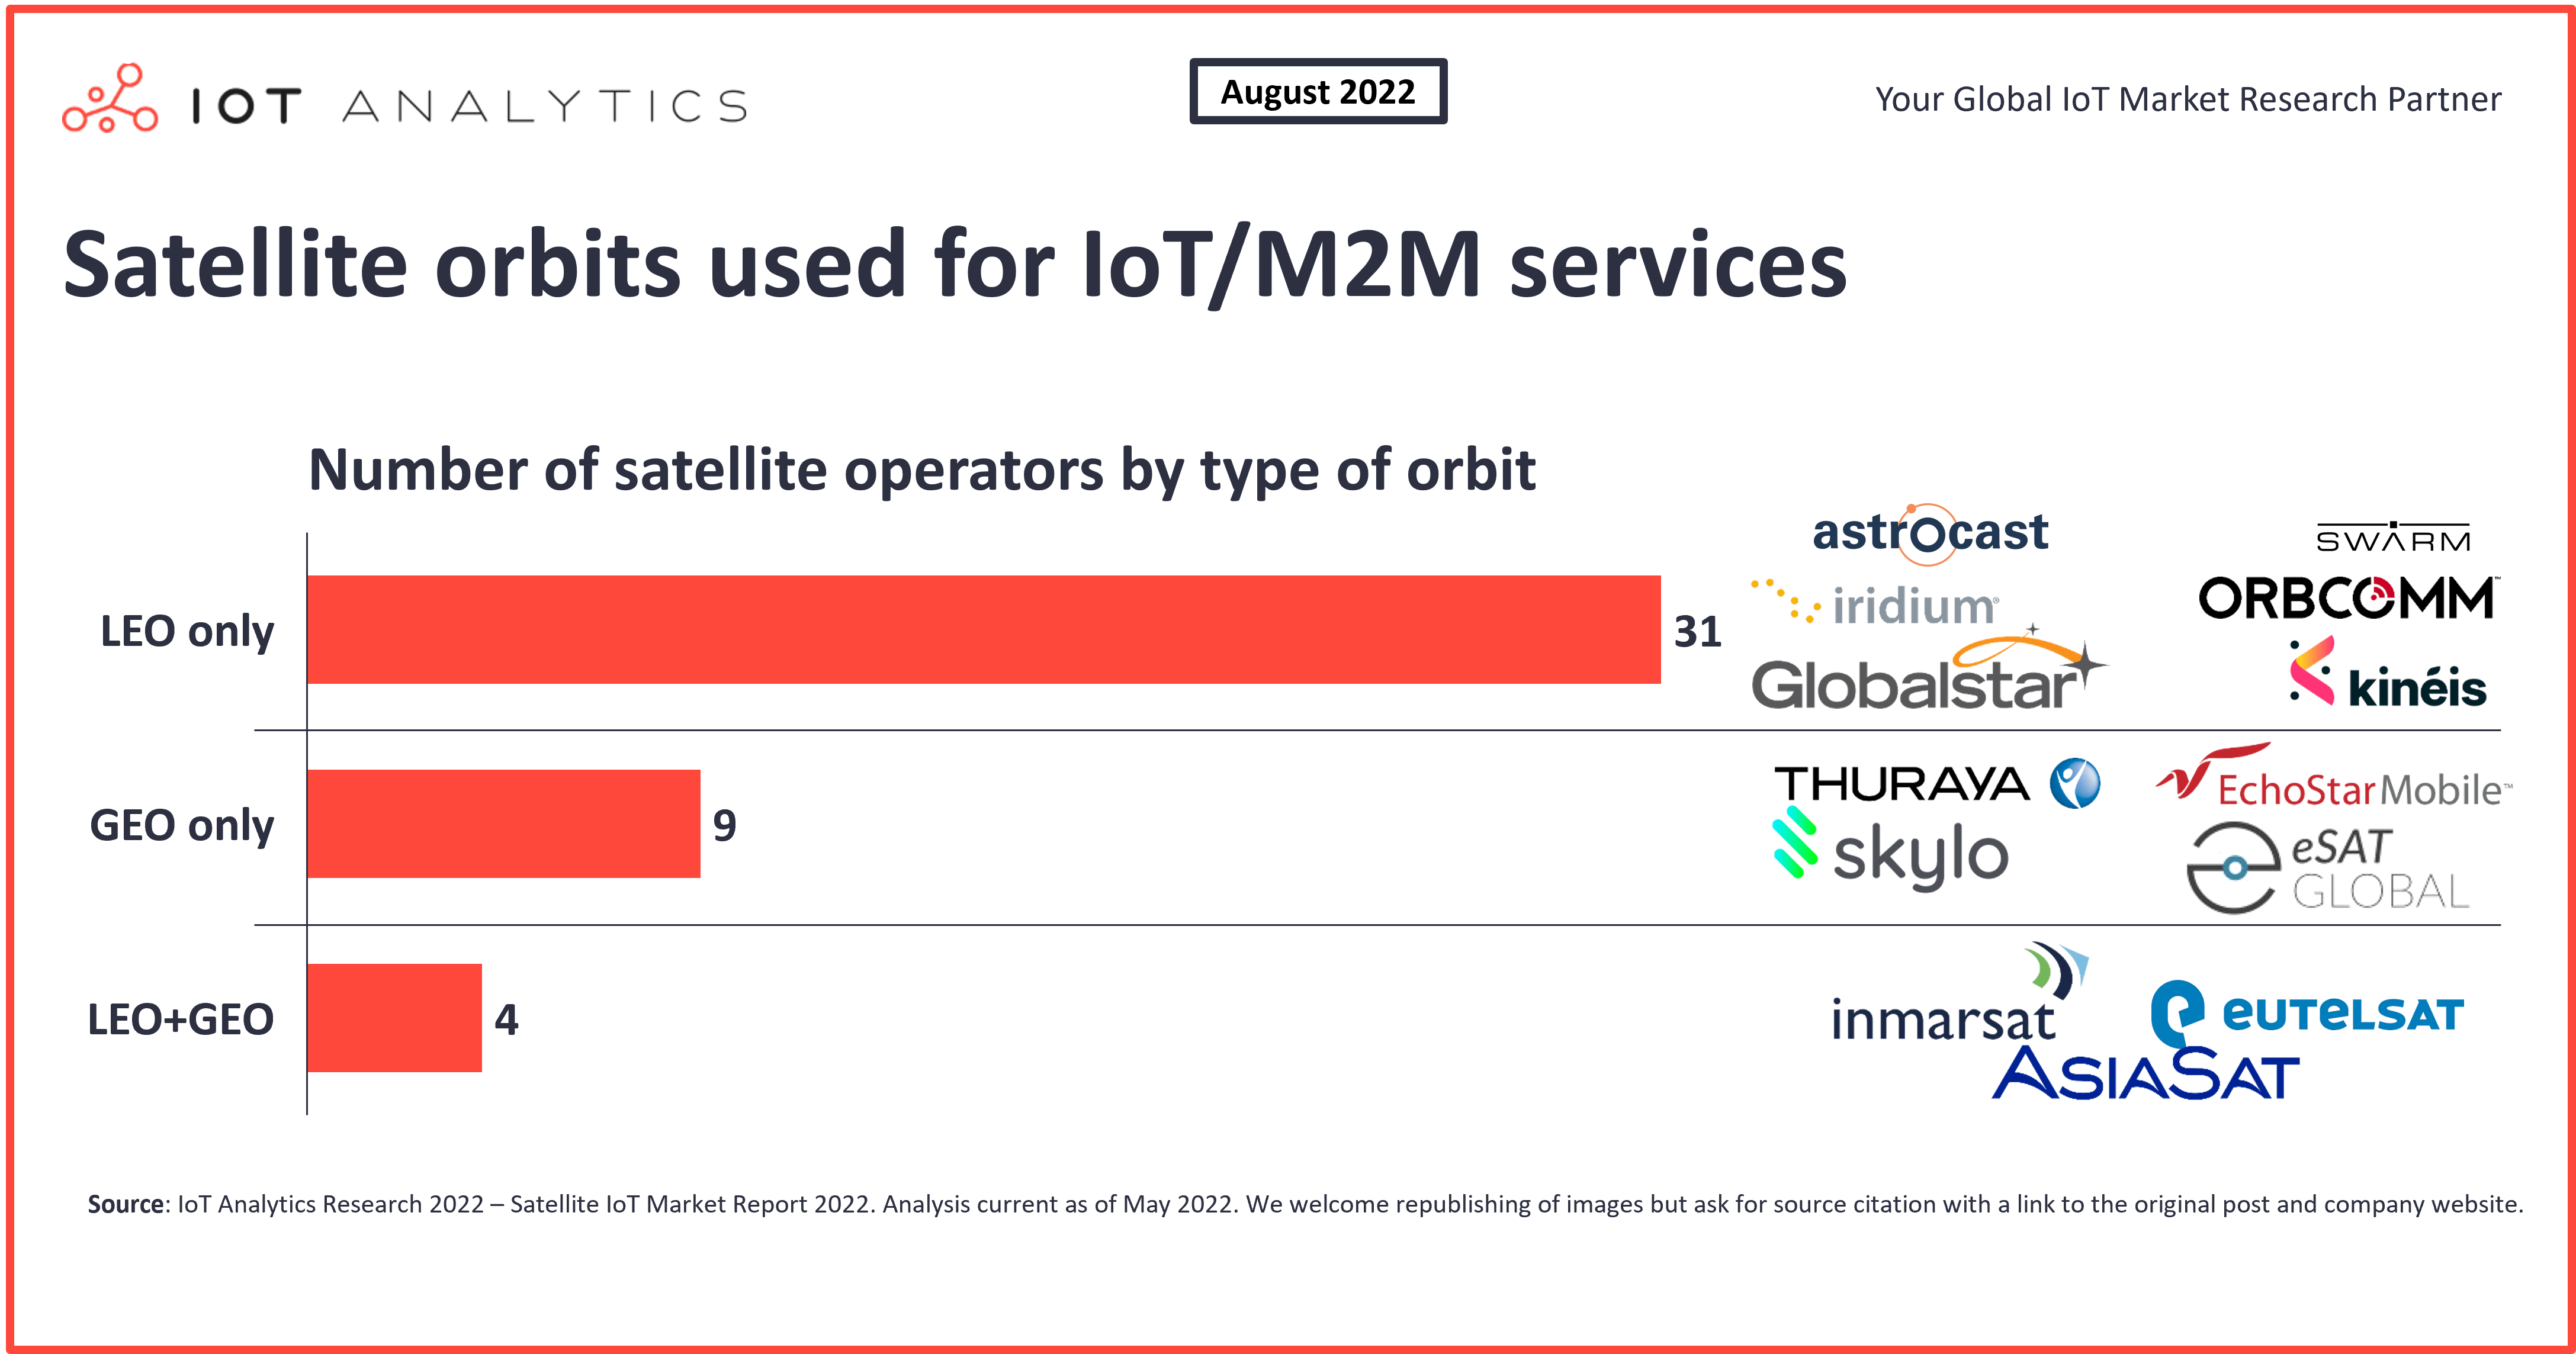 Satellite IoT Connectivity Market - Satellite orbits used for IoT M2M services